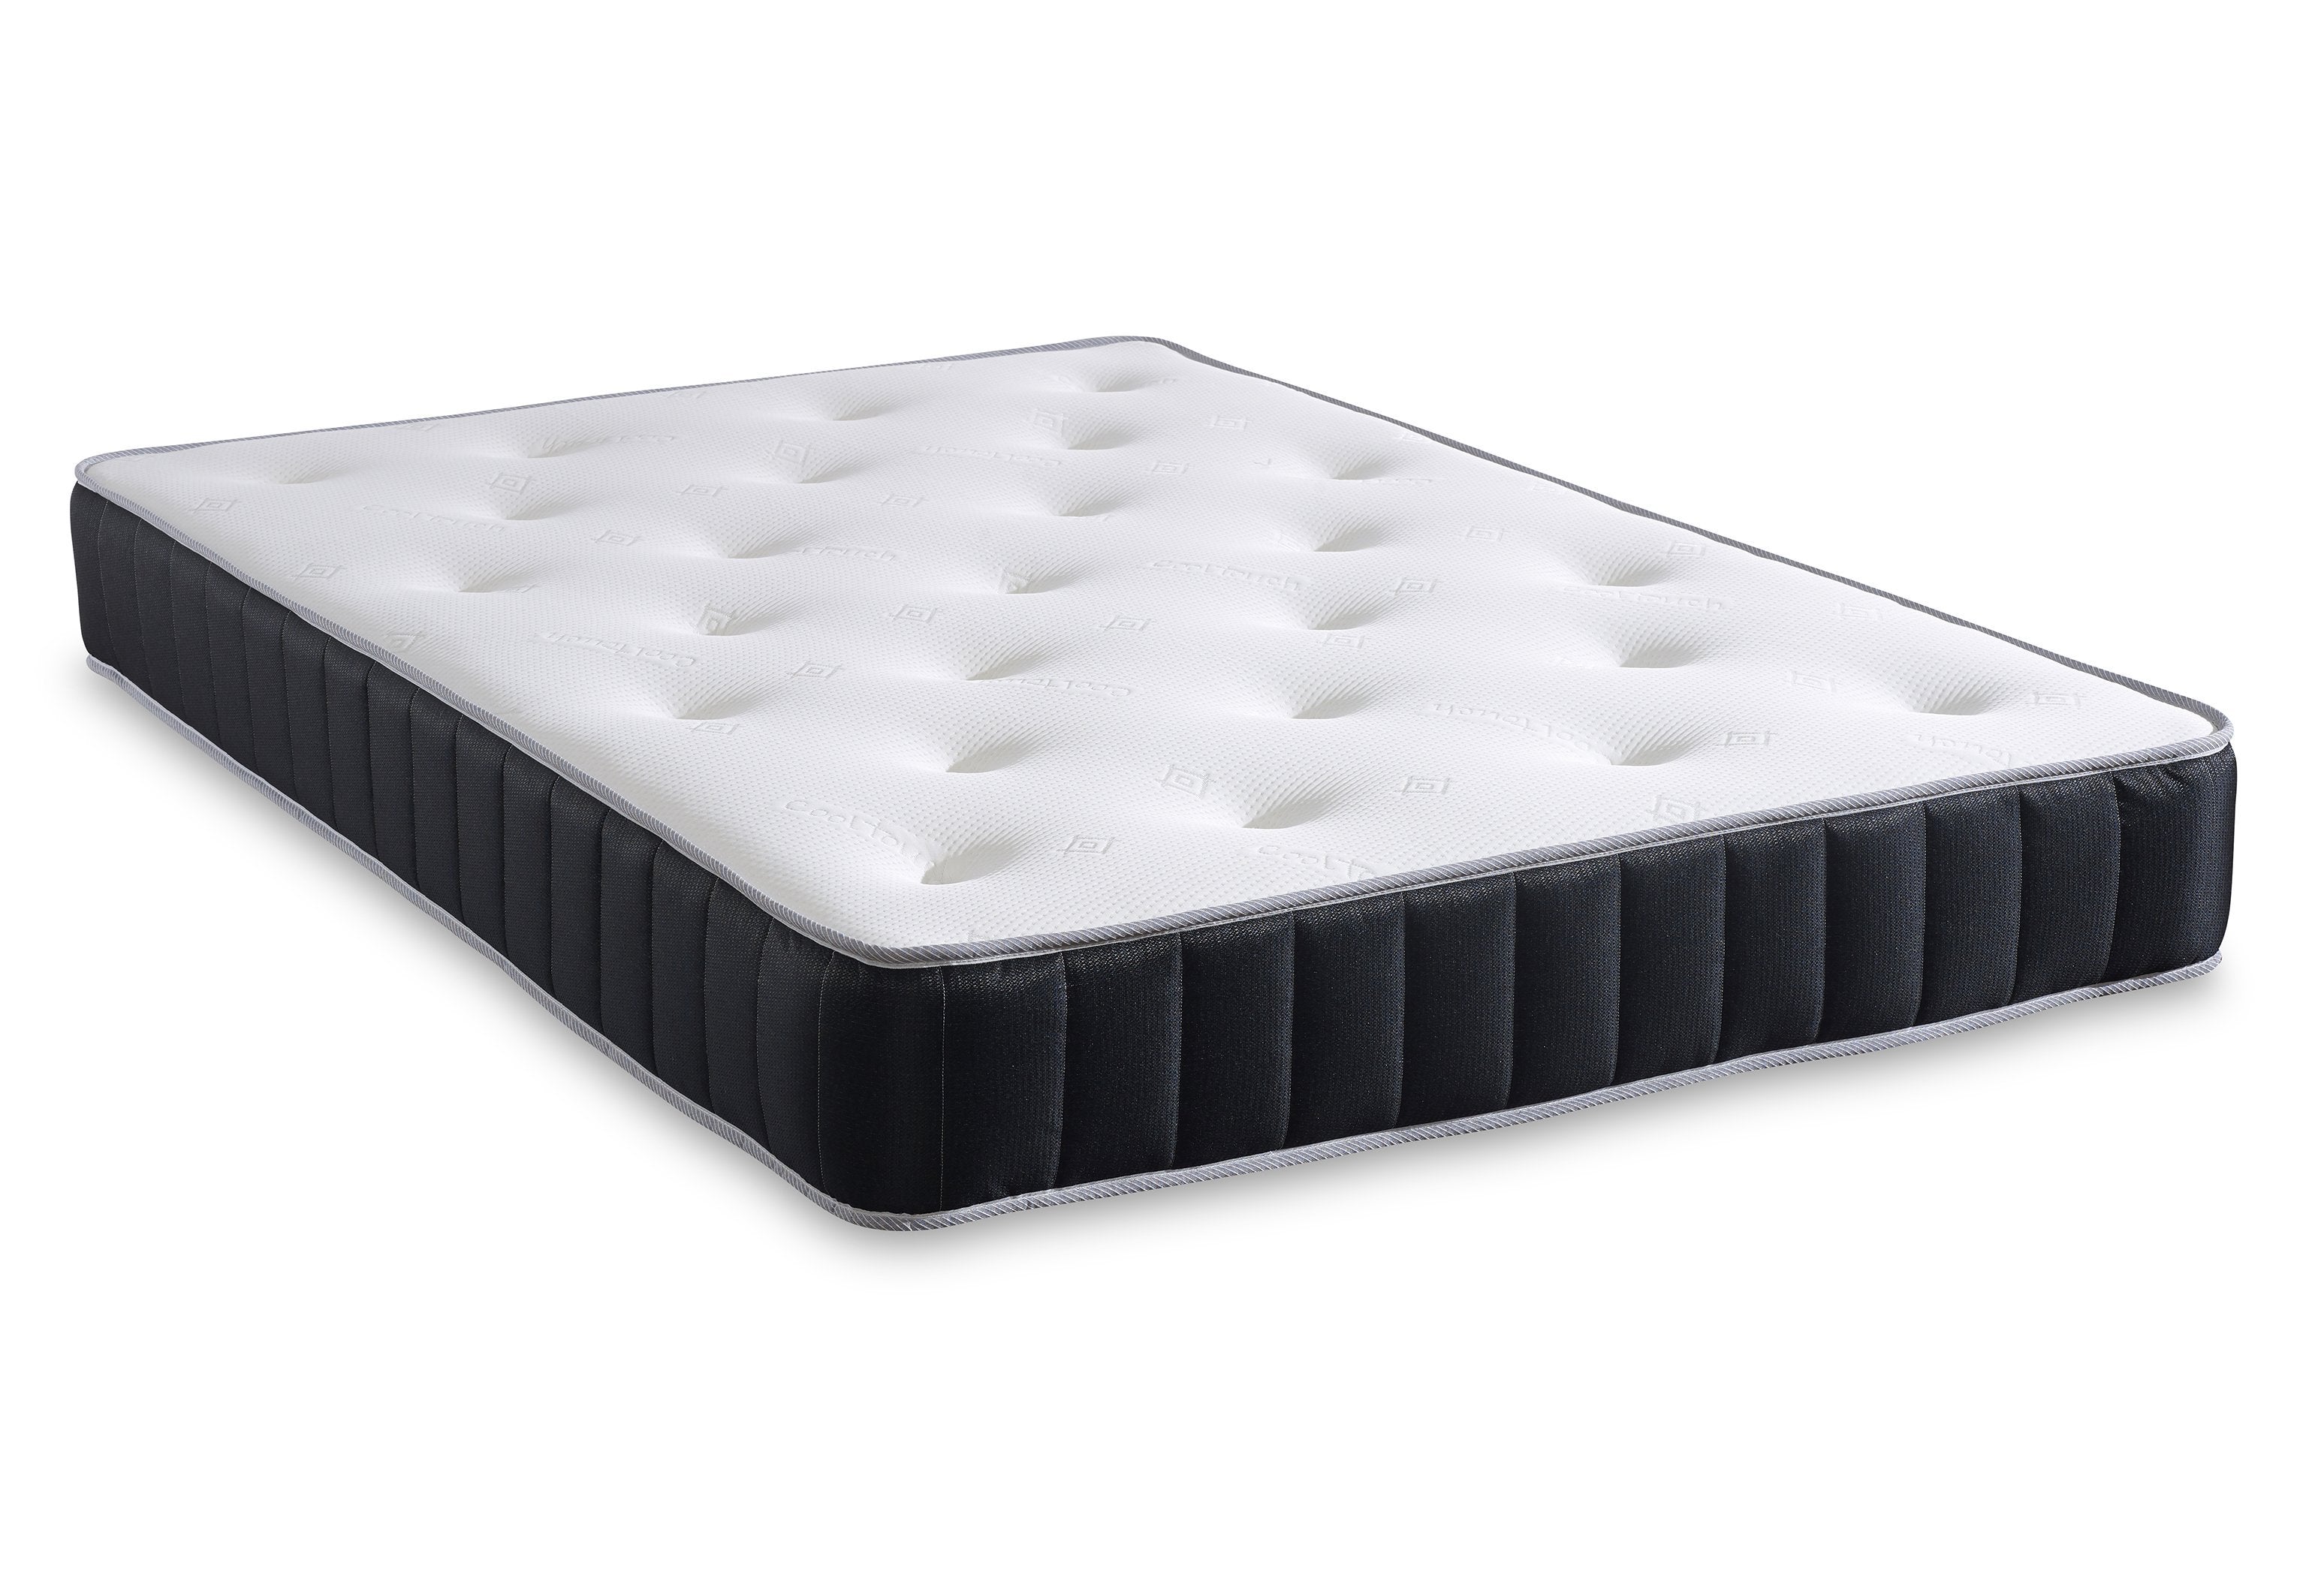 euro-luxury 5 layer memory foam mattress